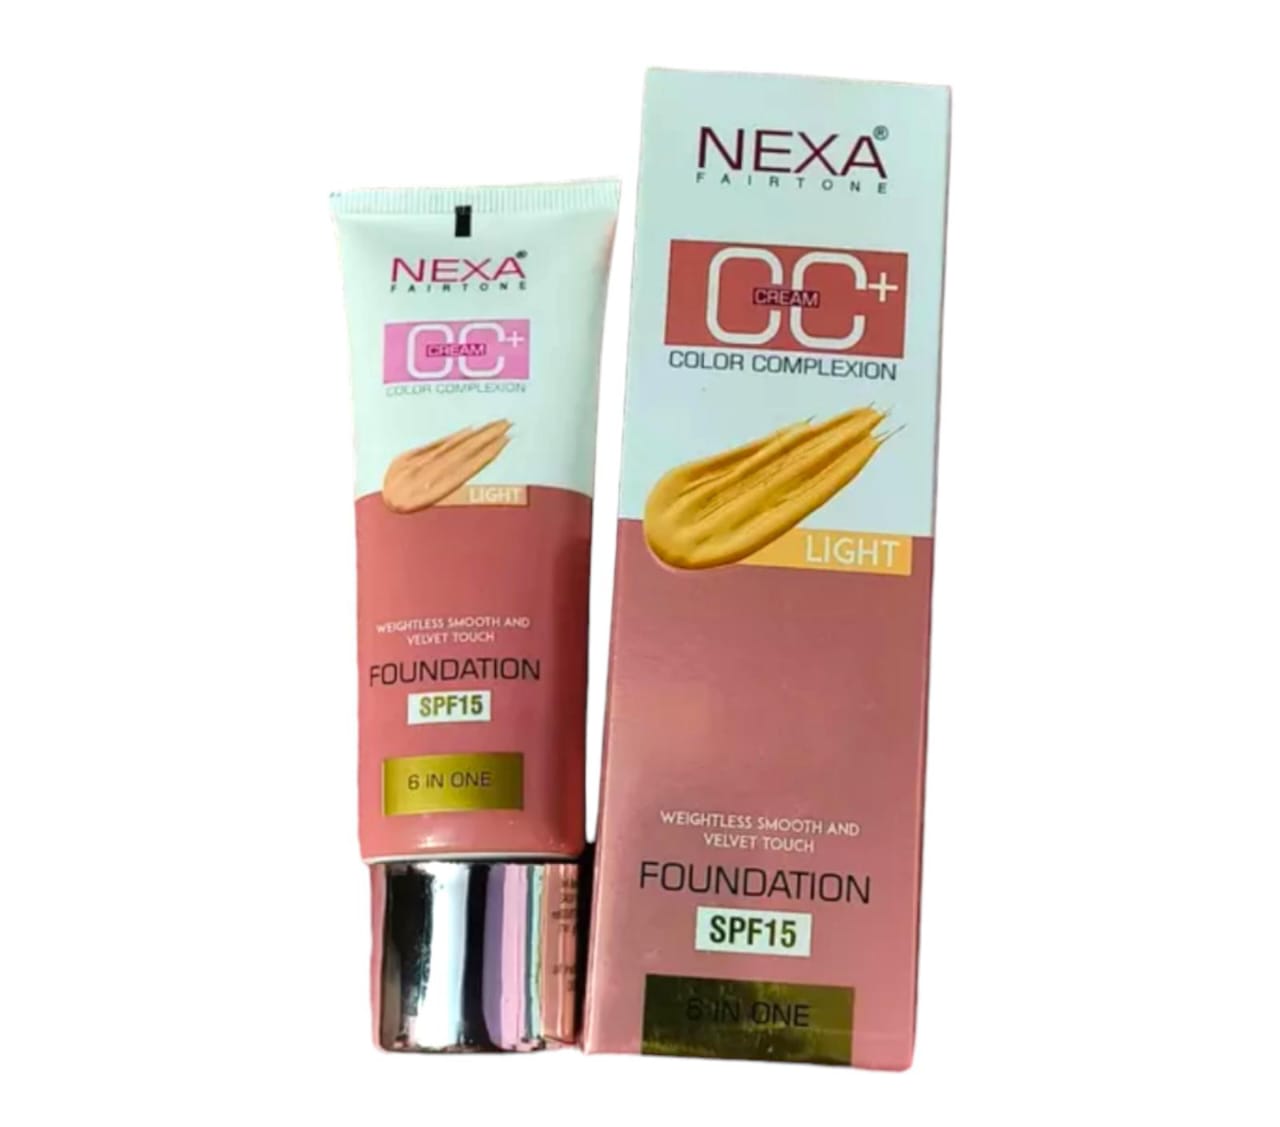 Nexa cc foundation cream